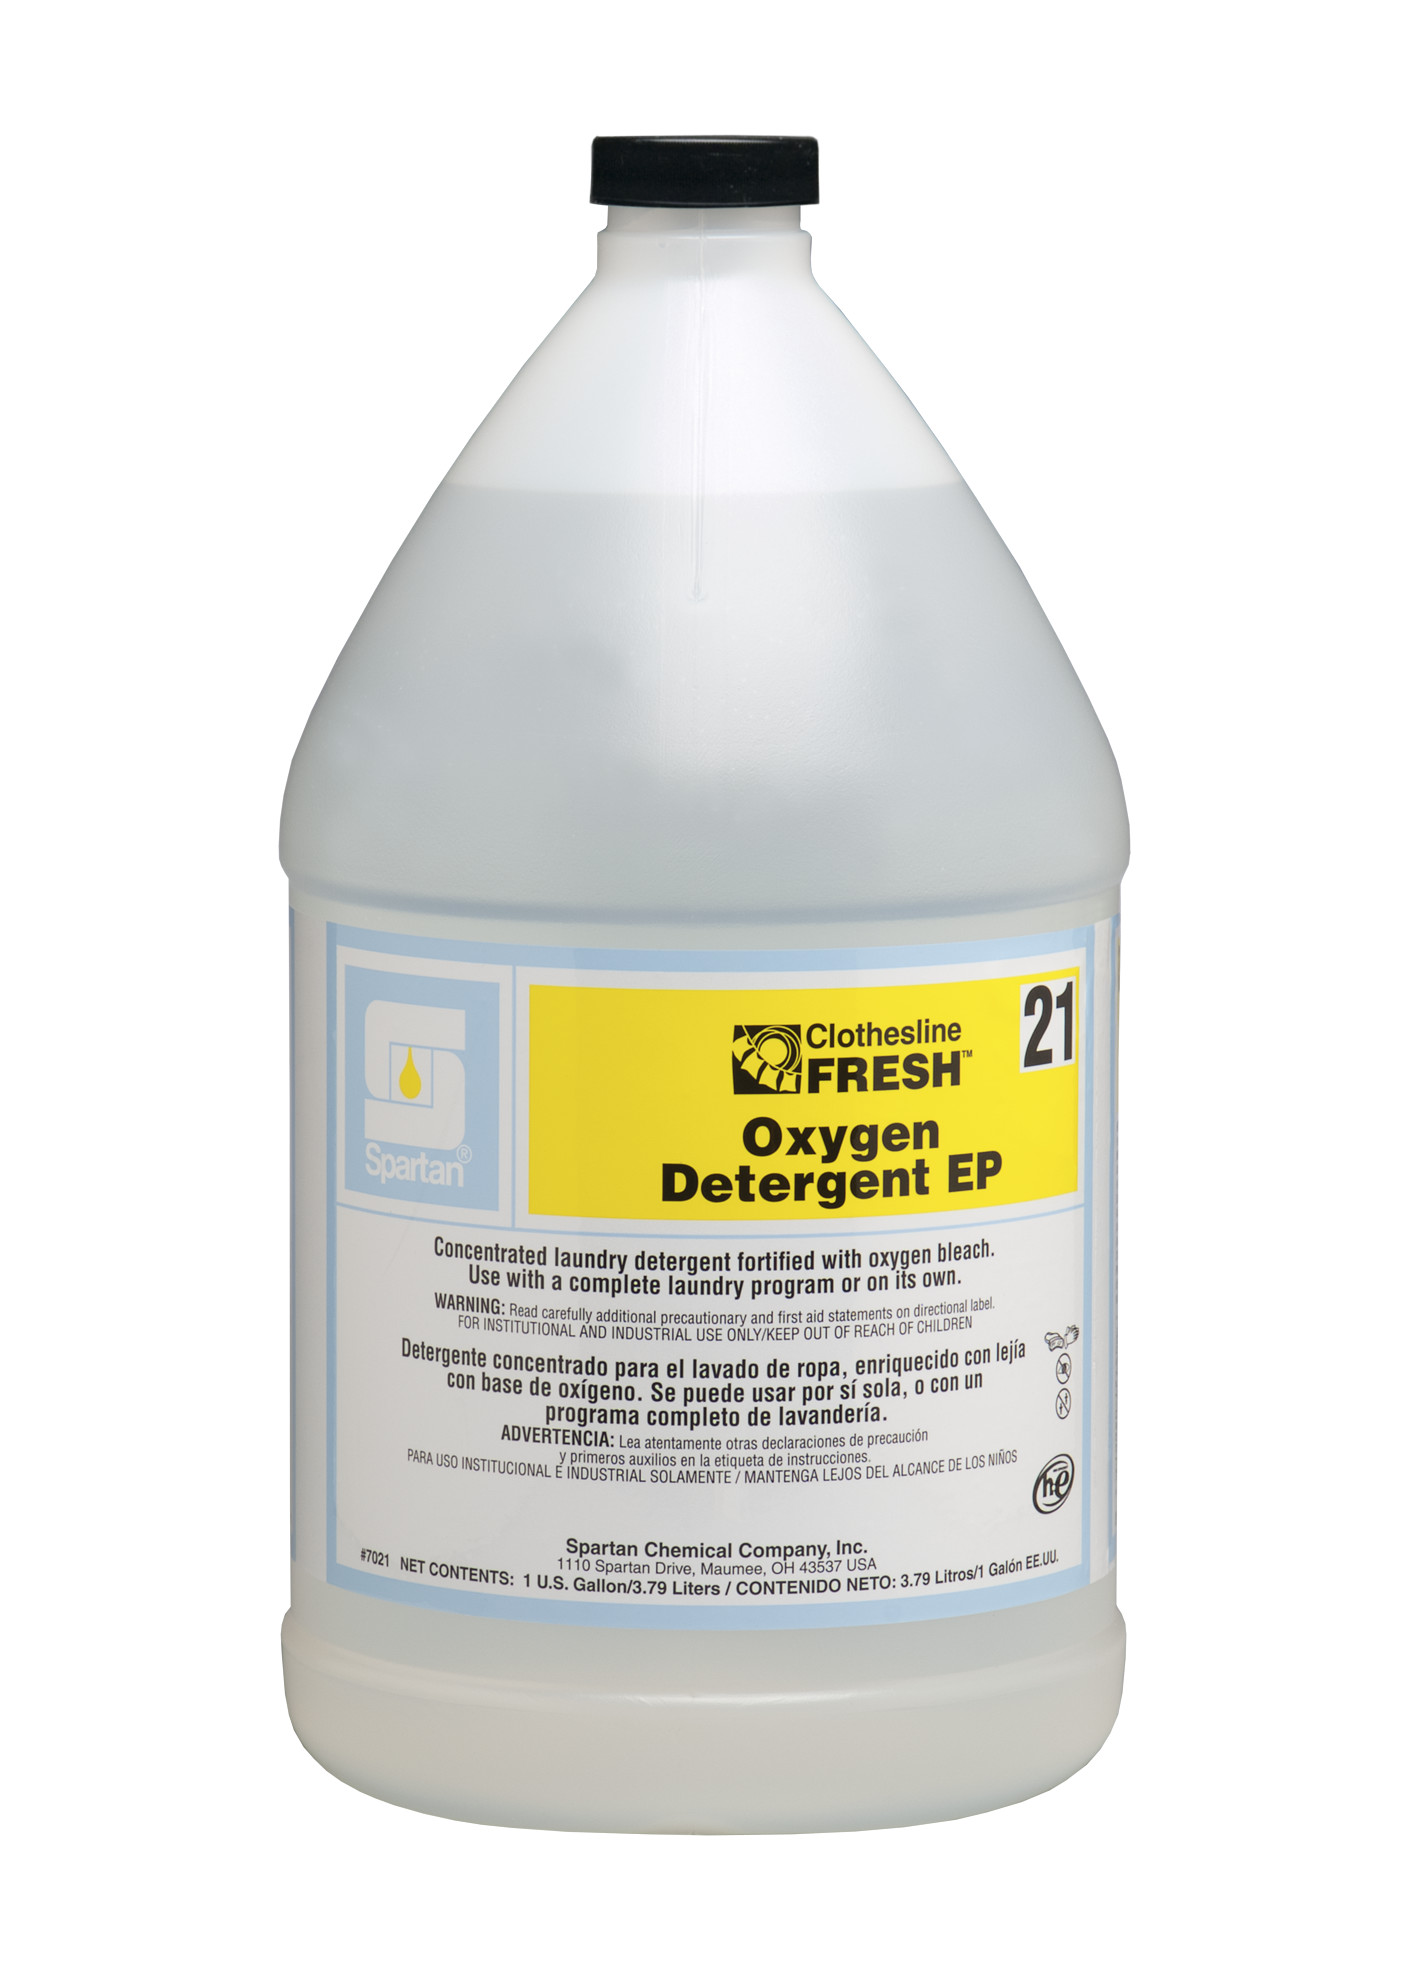 Spartan Chemical Company Clothesline Fresh Oxygen Detergent EP 21, 1 GAL 4/CSE